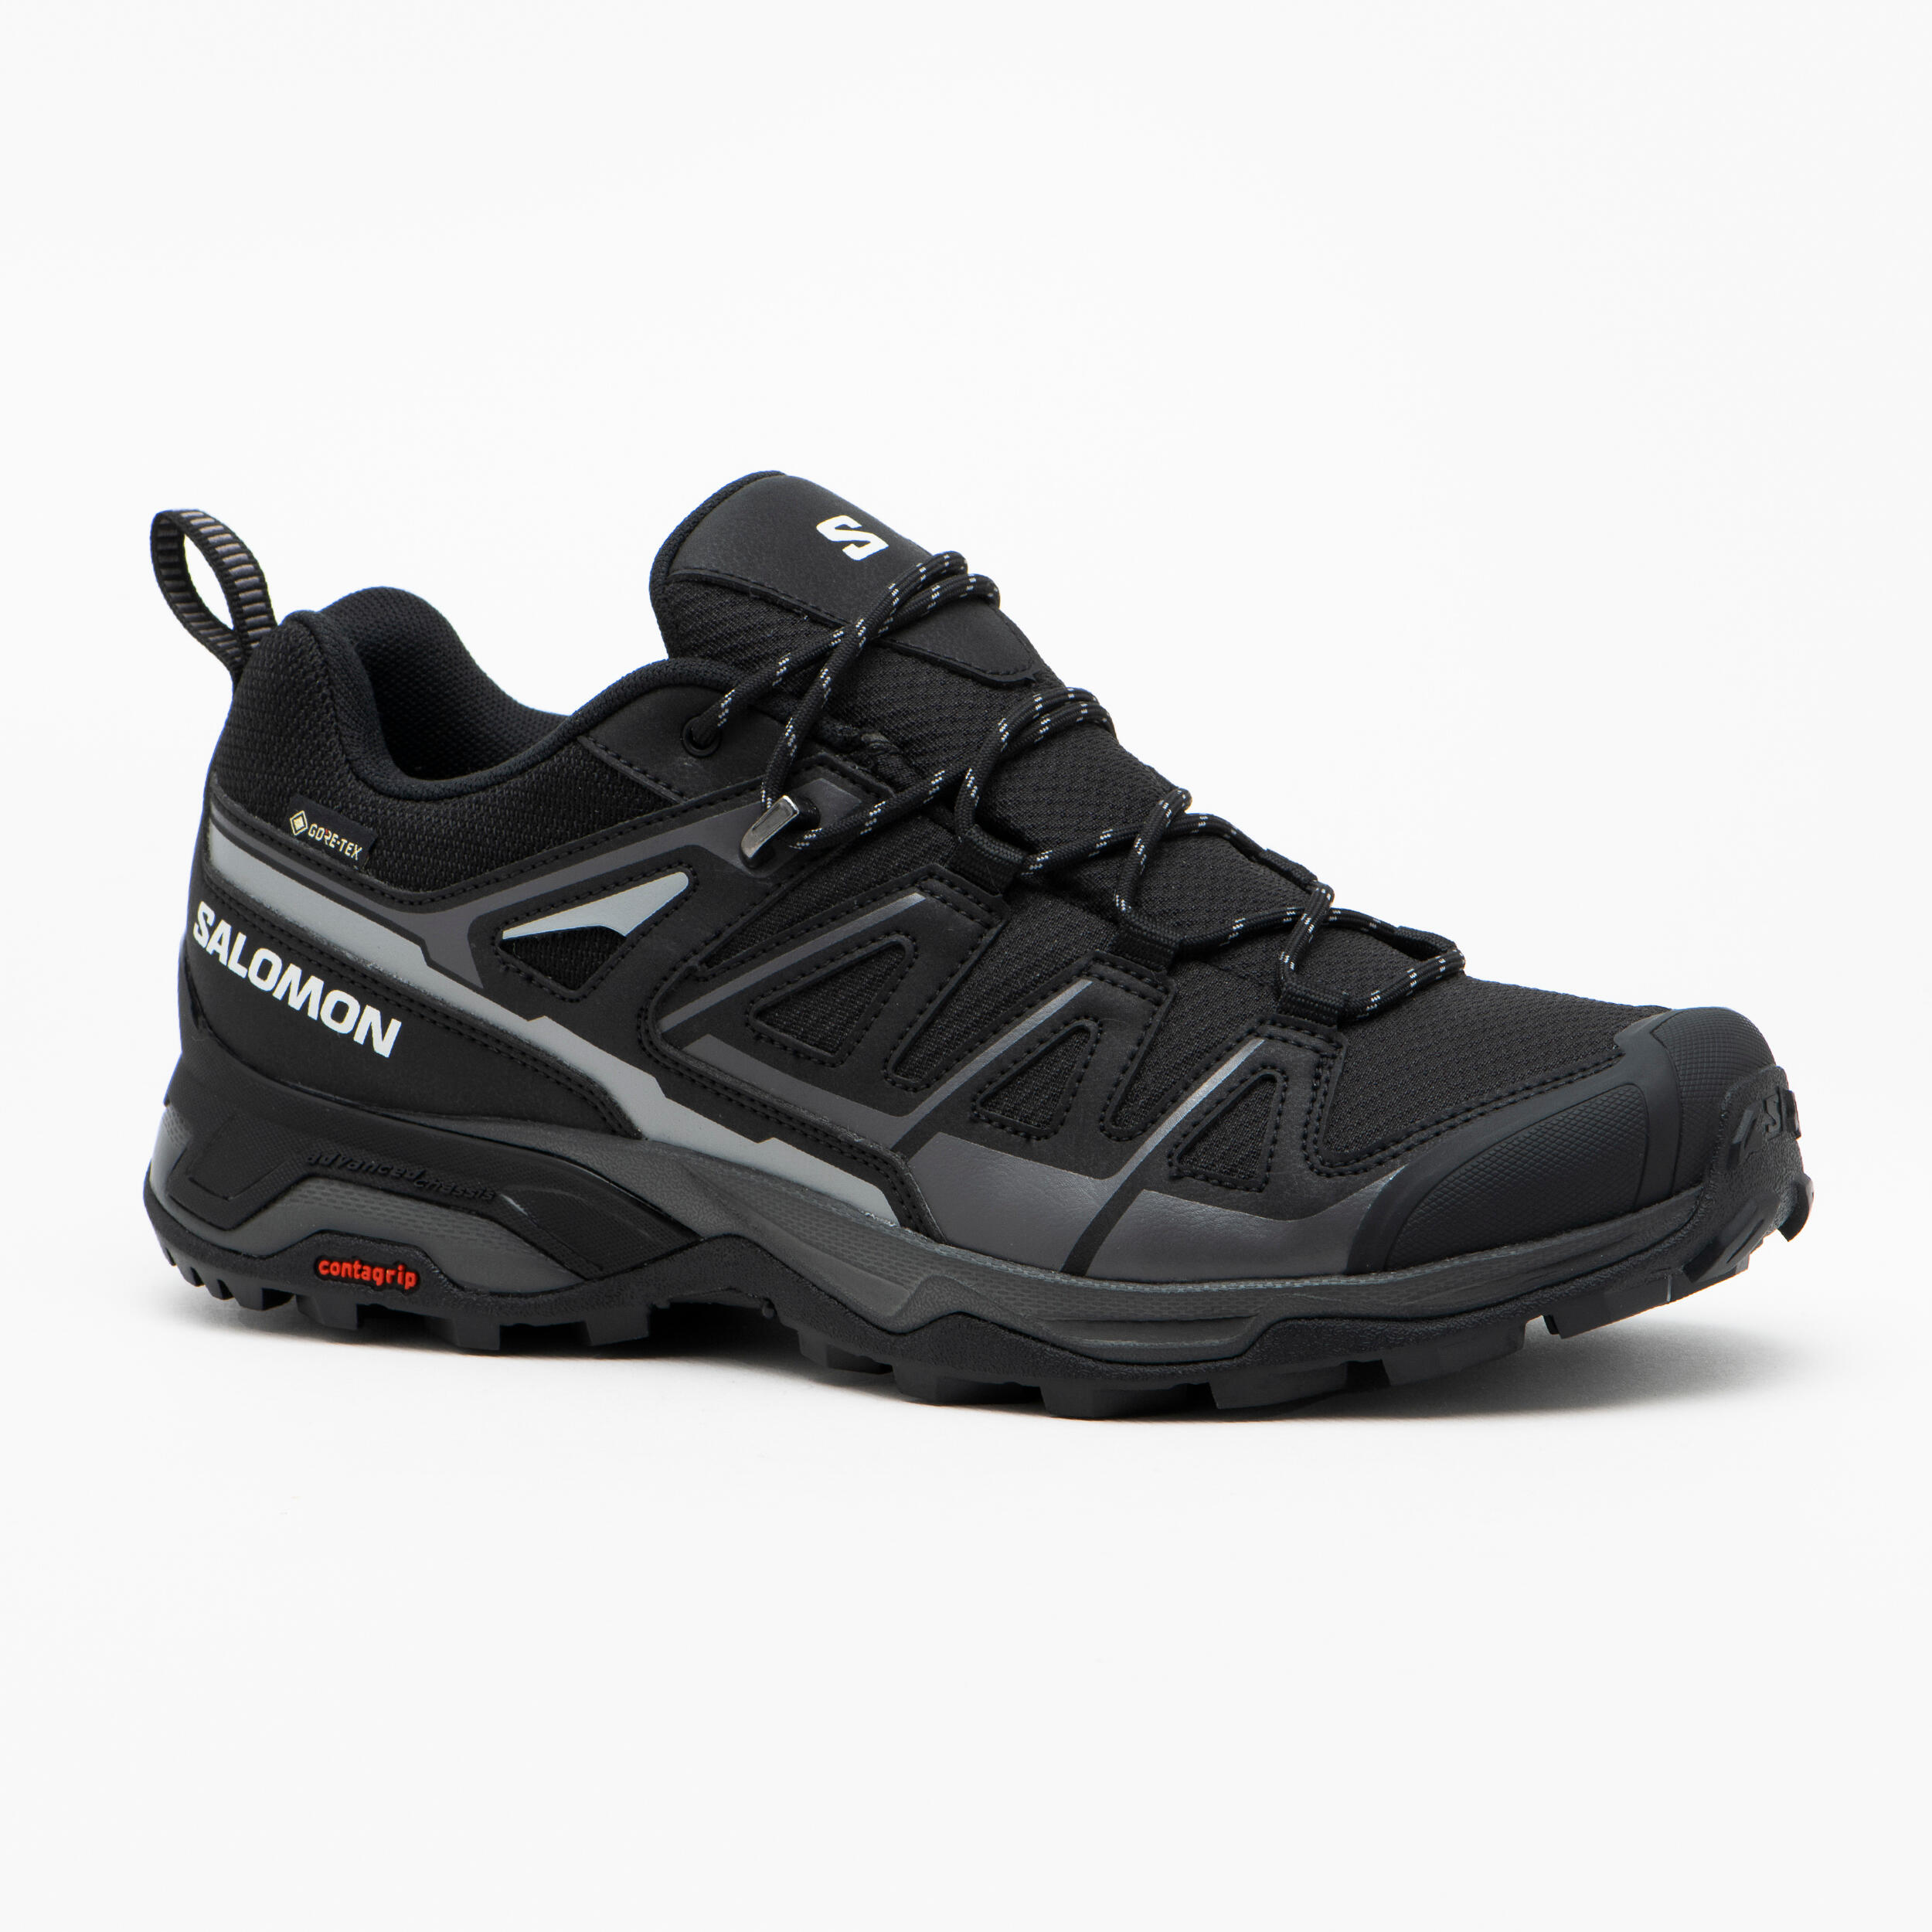 Salomon Men’s Waterproof Hiking Boots - X Ultra Pioneer 2 GTX